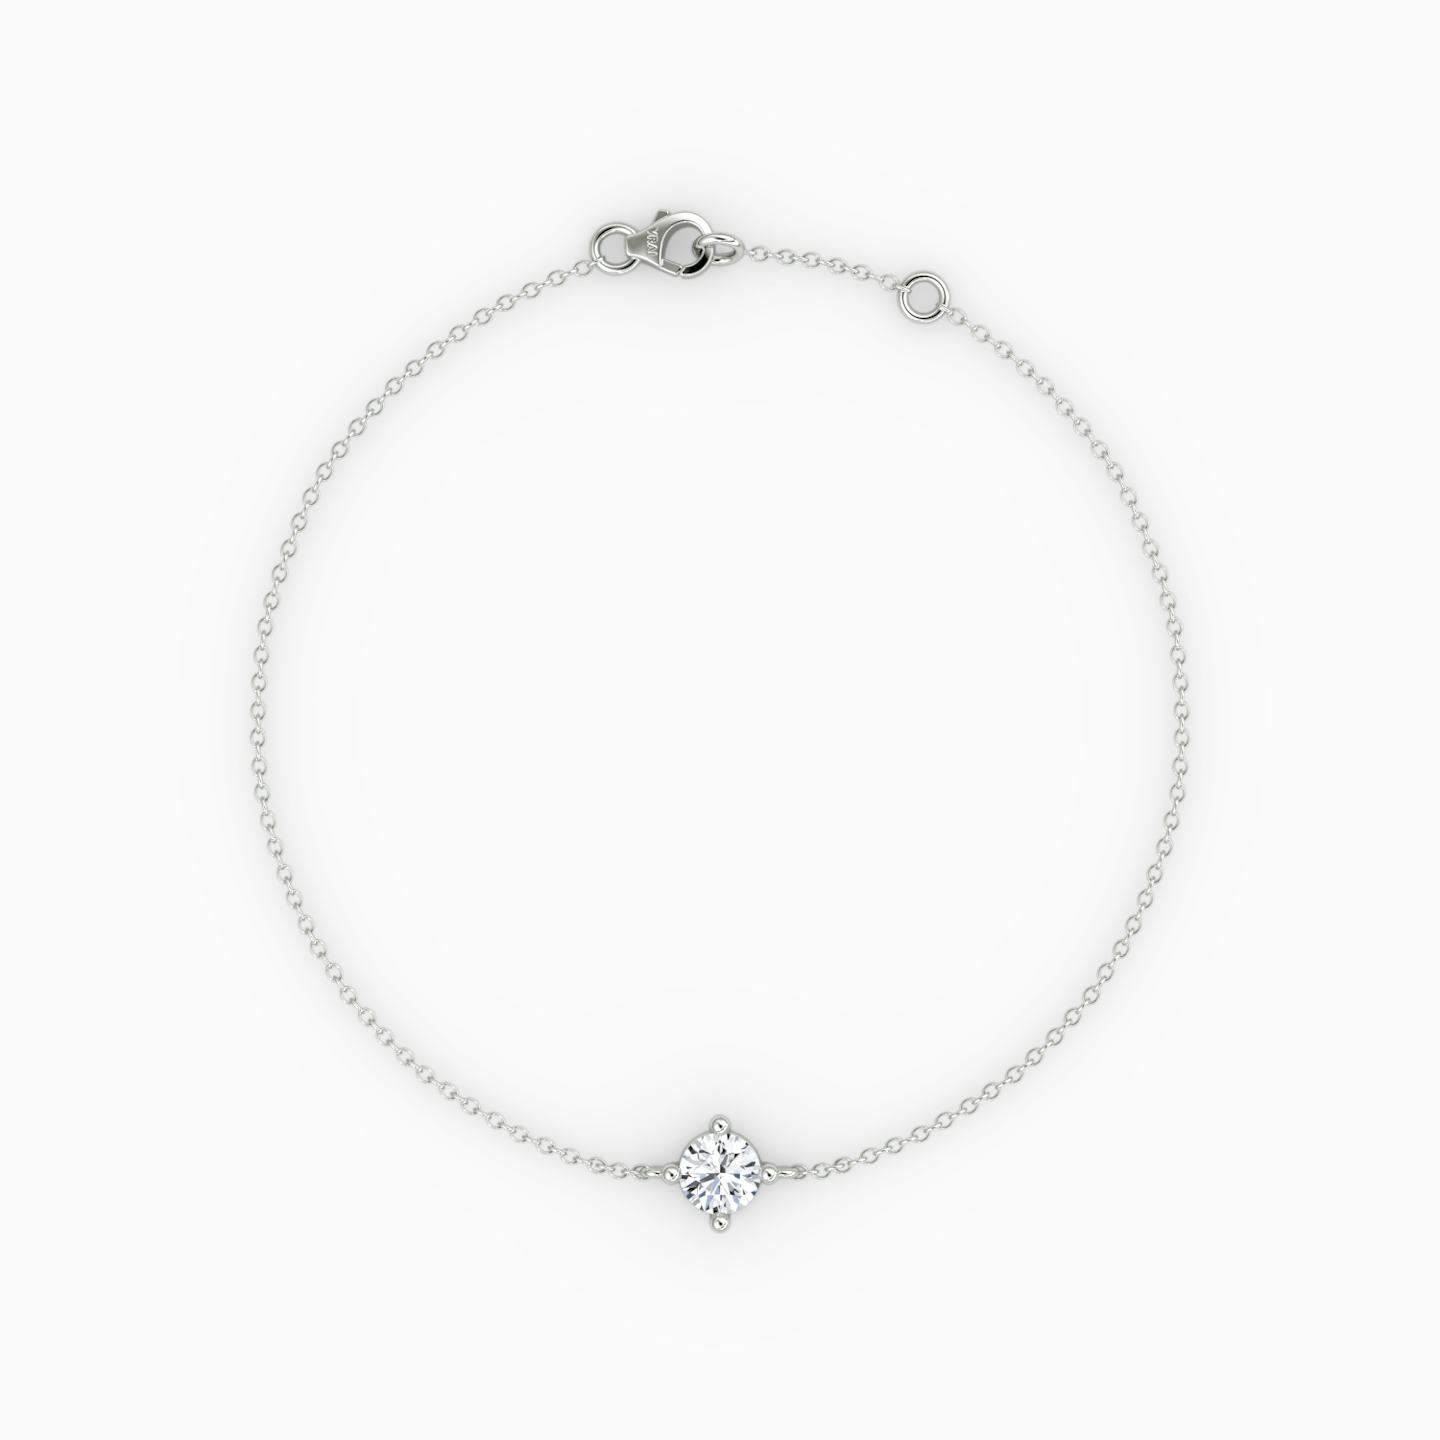 Petite Solitaire Bracelet | Round Brilliant | Sterling Silver | Chain length: 6.5-7